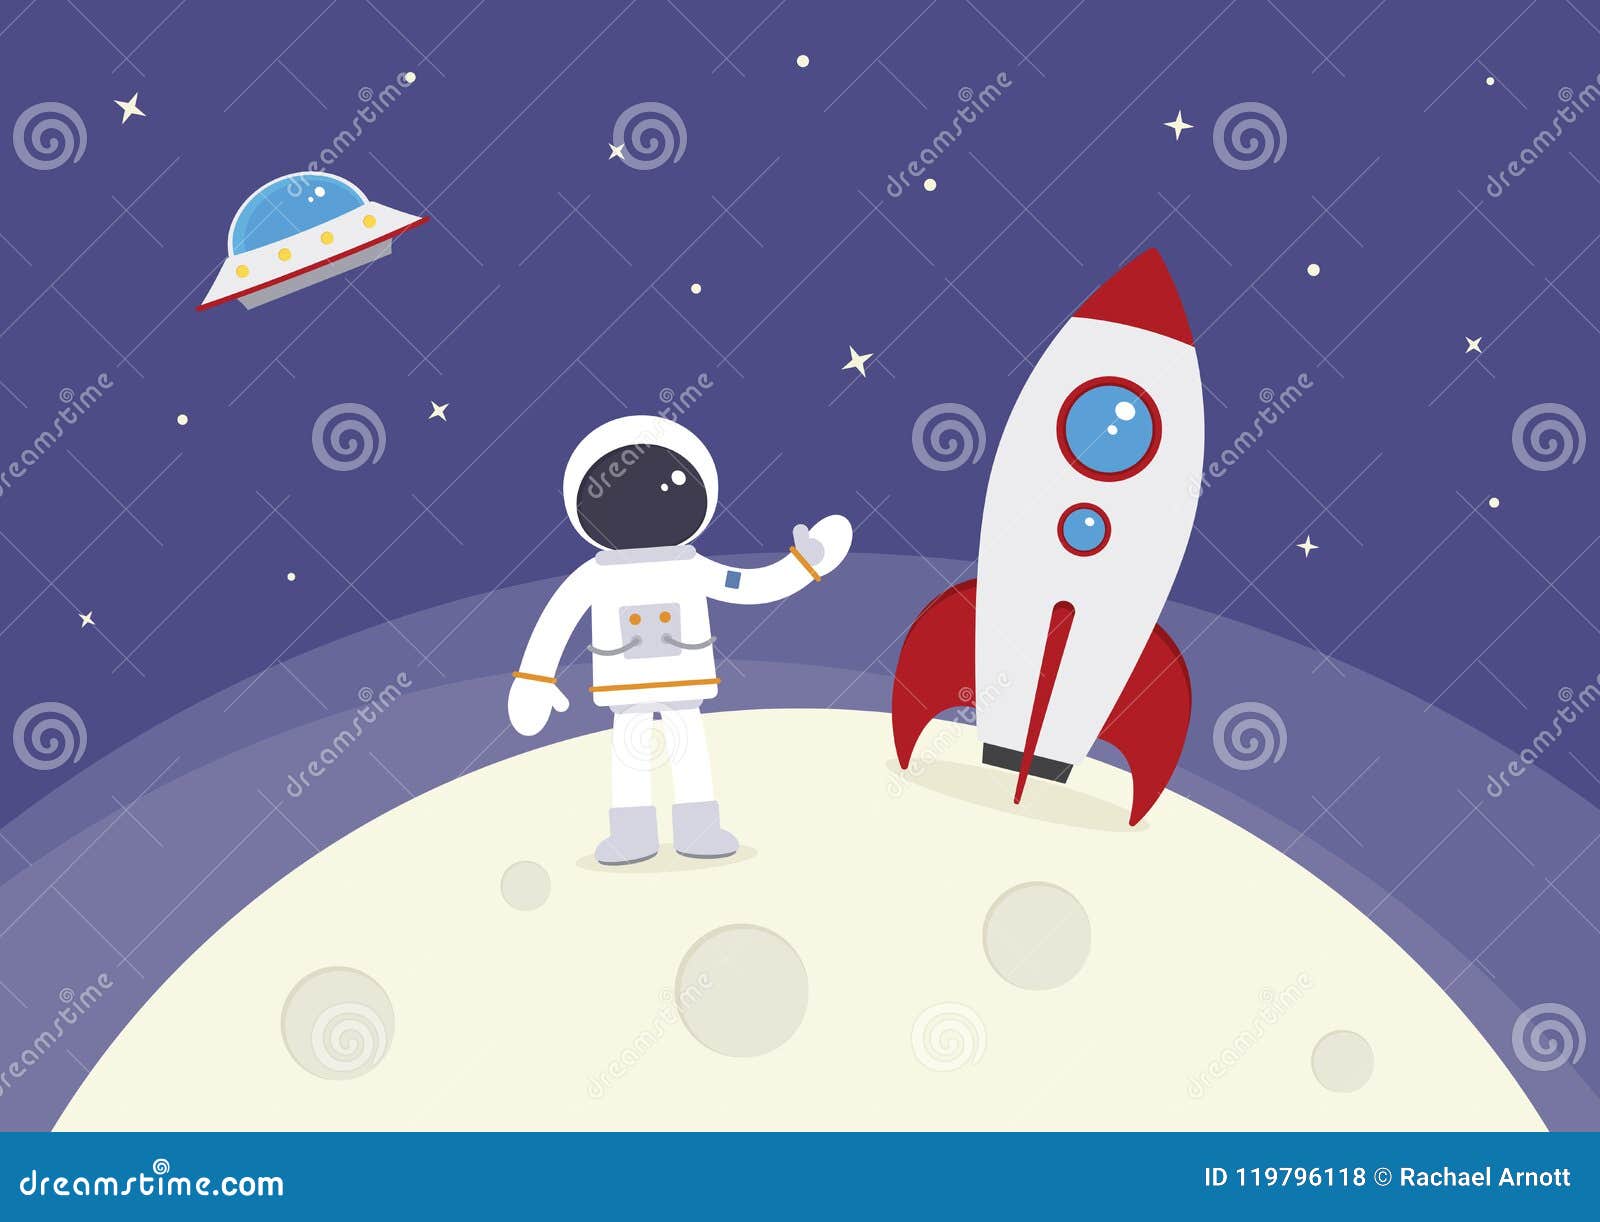 Ракета на луне рисунок. Рисование ракета в космосе. Космонавт на Луне с ракетой. Космос ракета космонавт. Рисунки на тему космос с космонавтами.